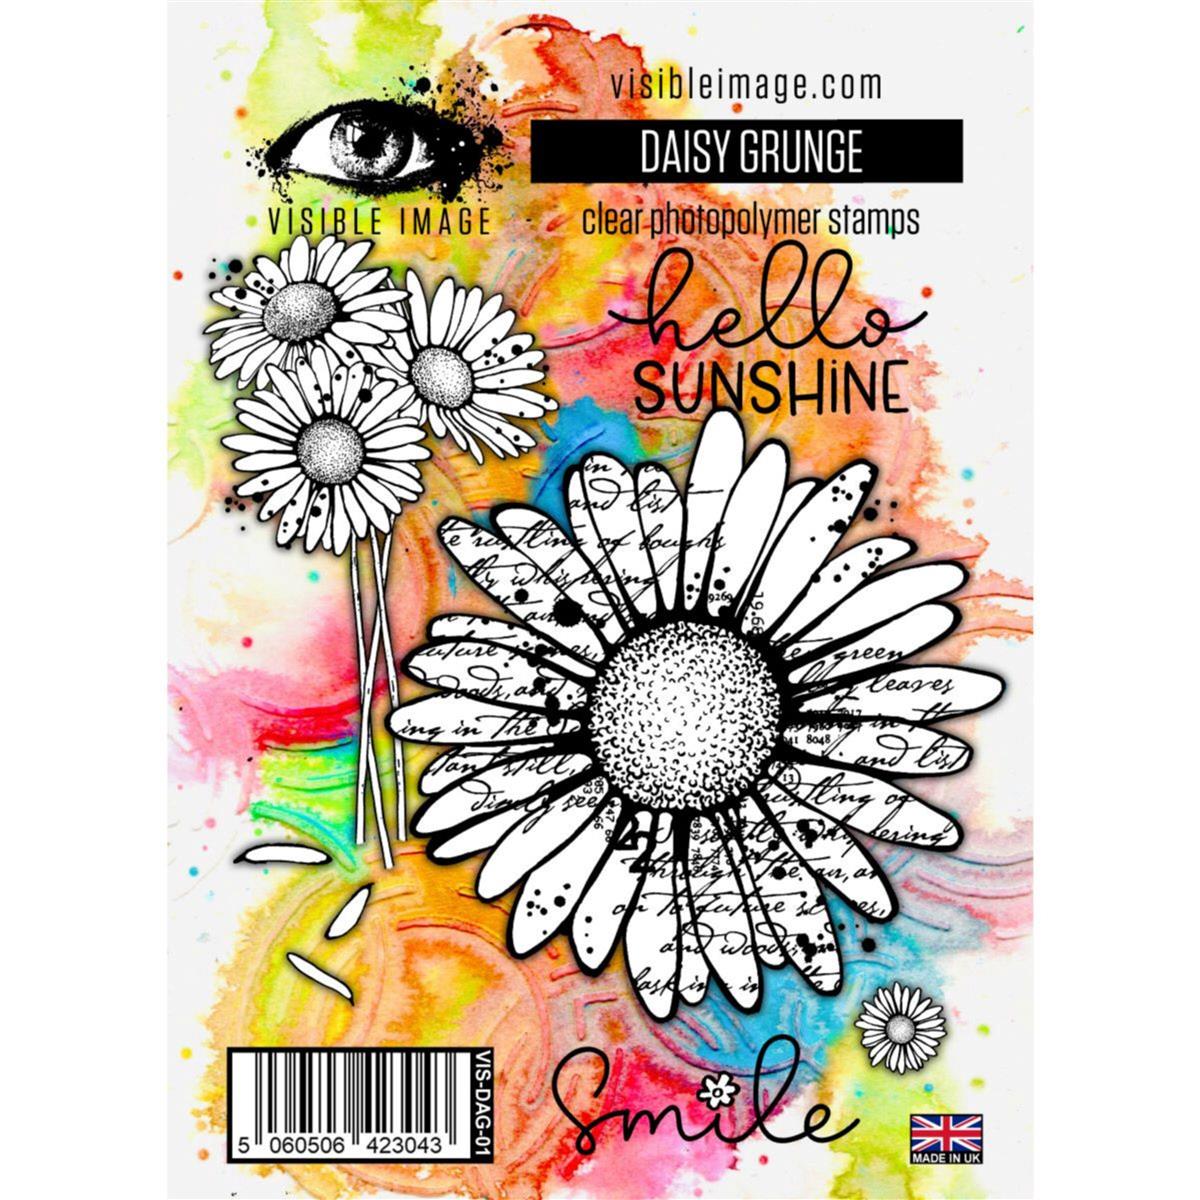 Visible Image Daisy Grunge Stamp Set | VisibleImage